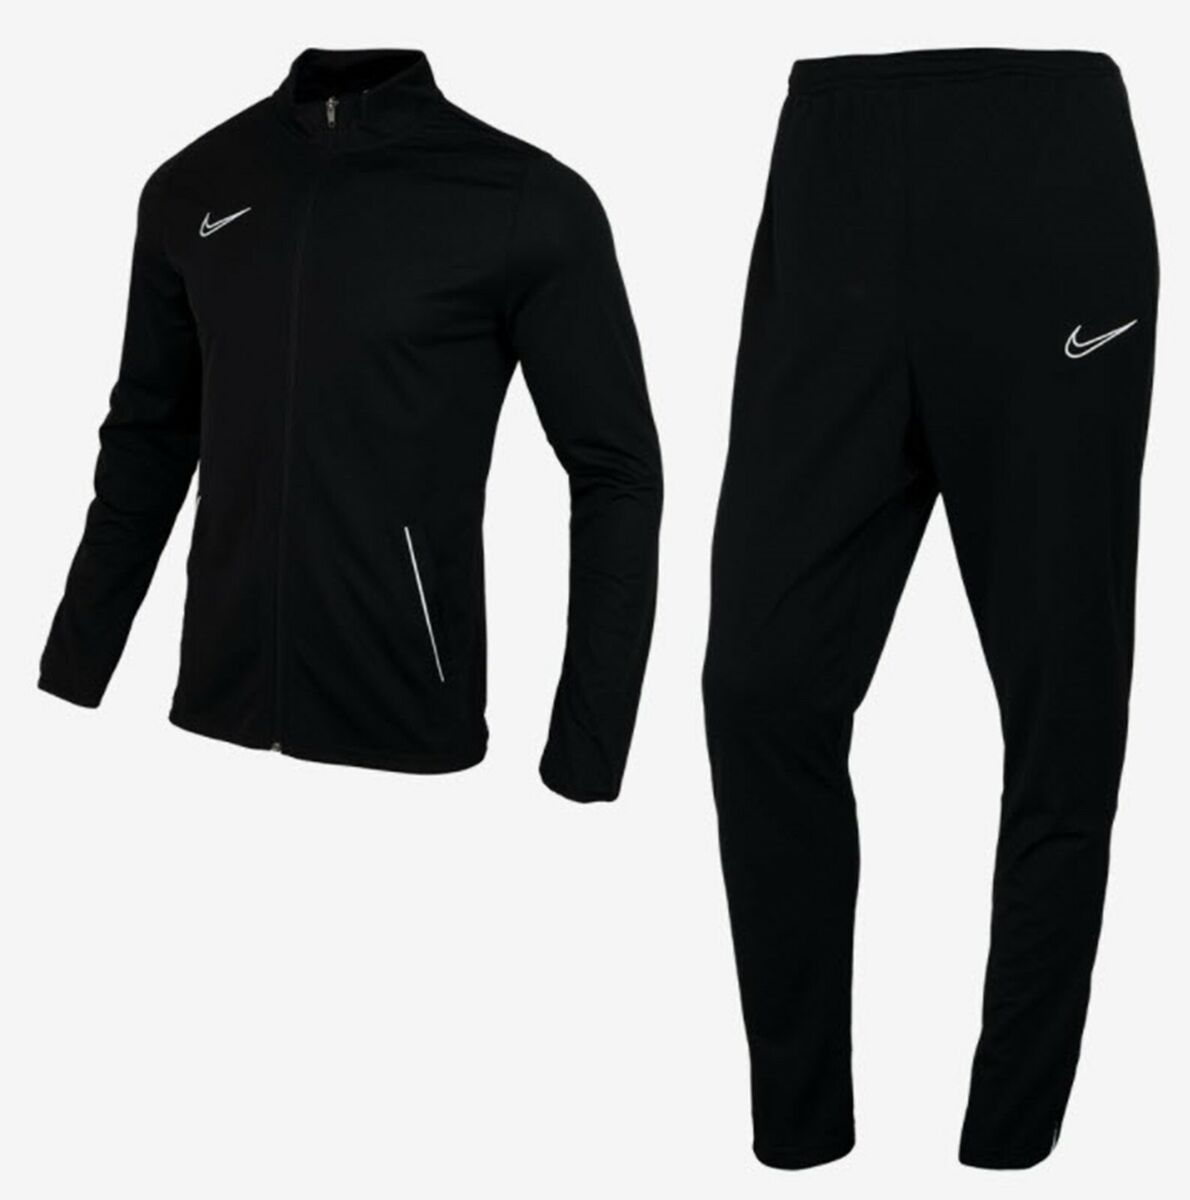 Hobart hoy mineral Nike Men AS Dry Academy 21 Track Suit Set Black Jacket Pant Jersey  CW6131-010 | eBay